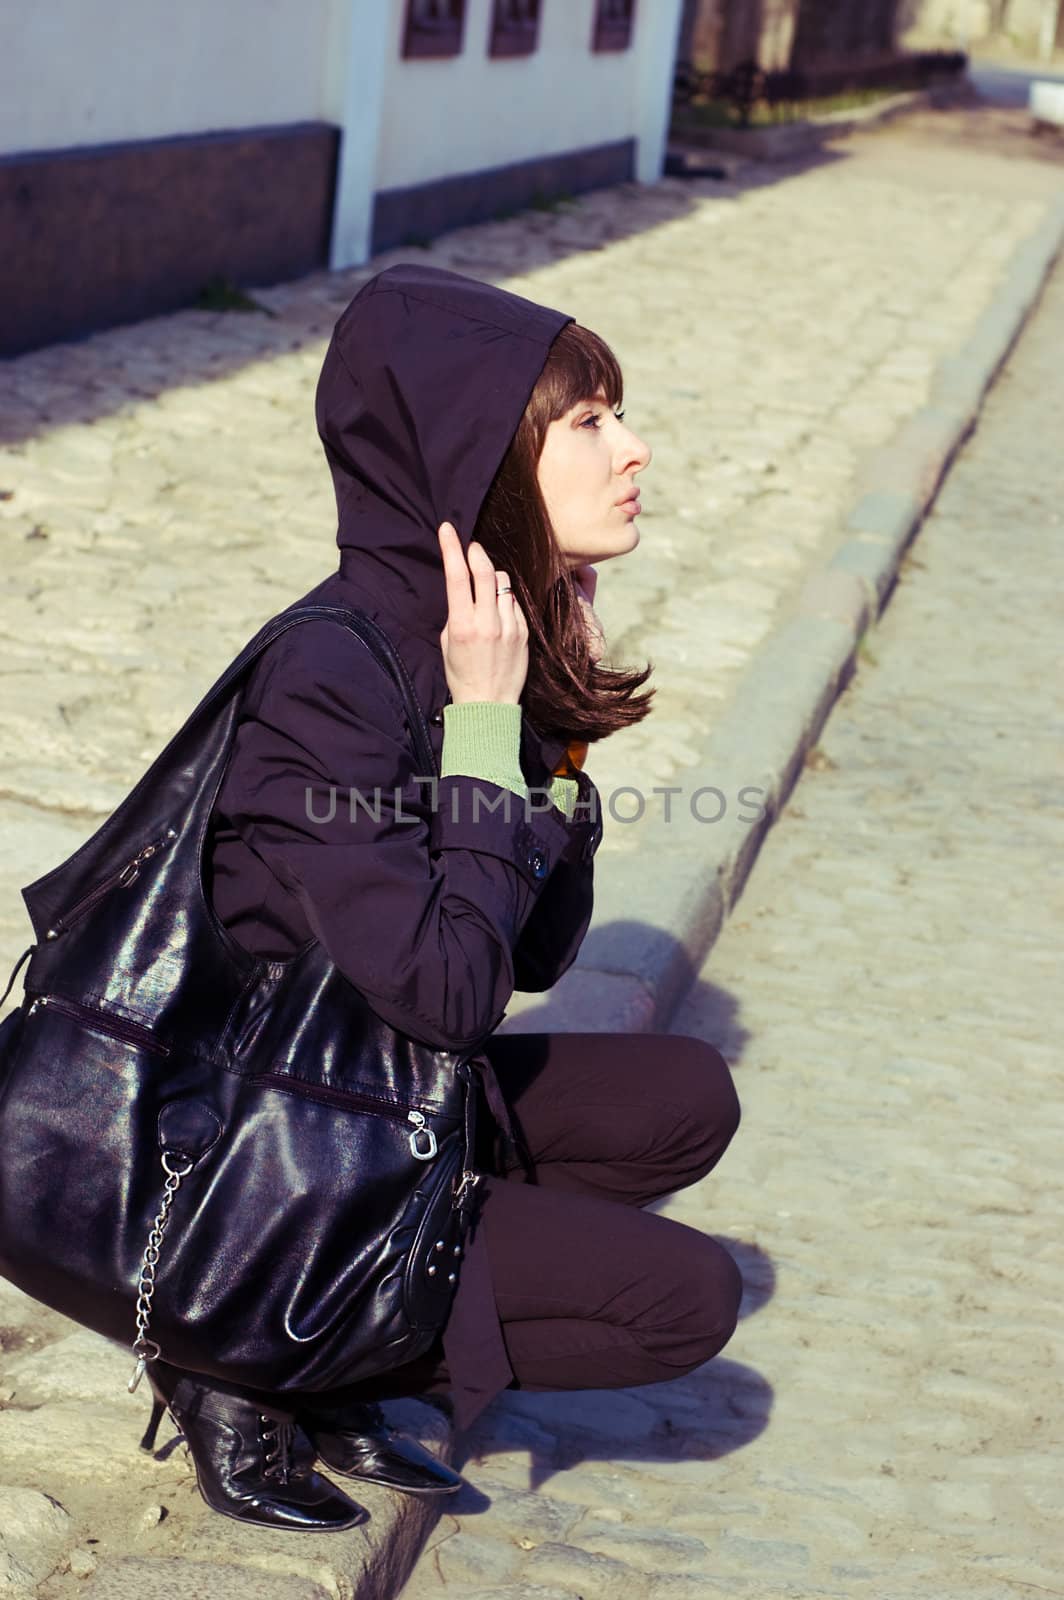 Sad brunette with hood on the pavement edge